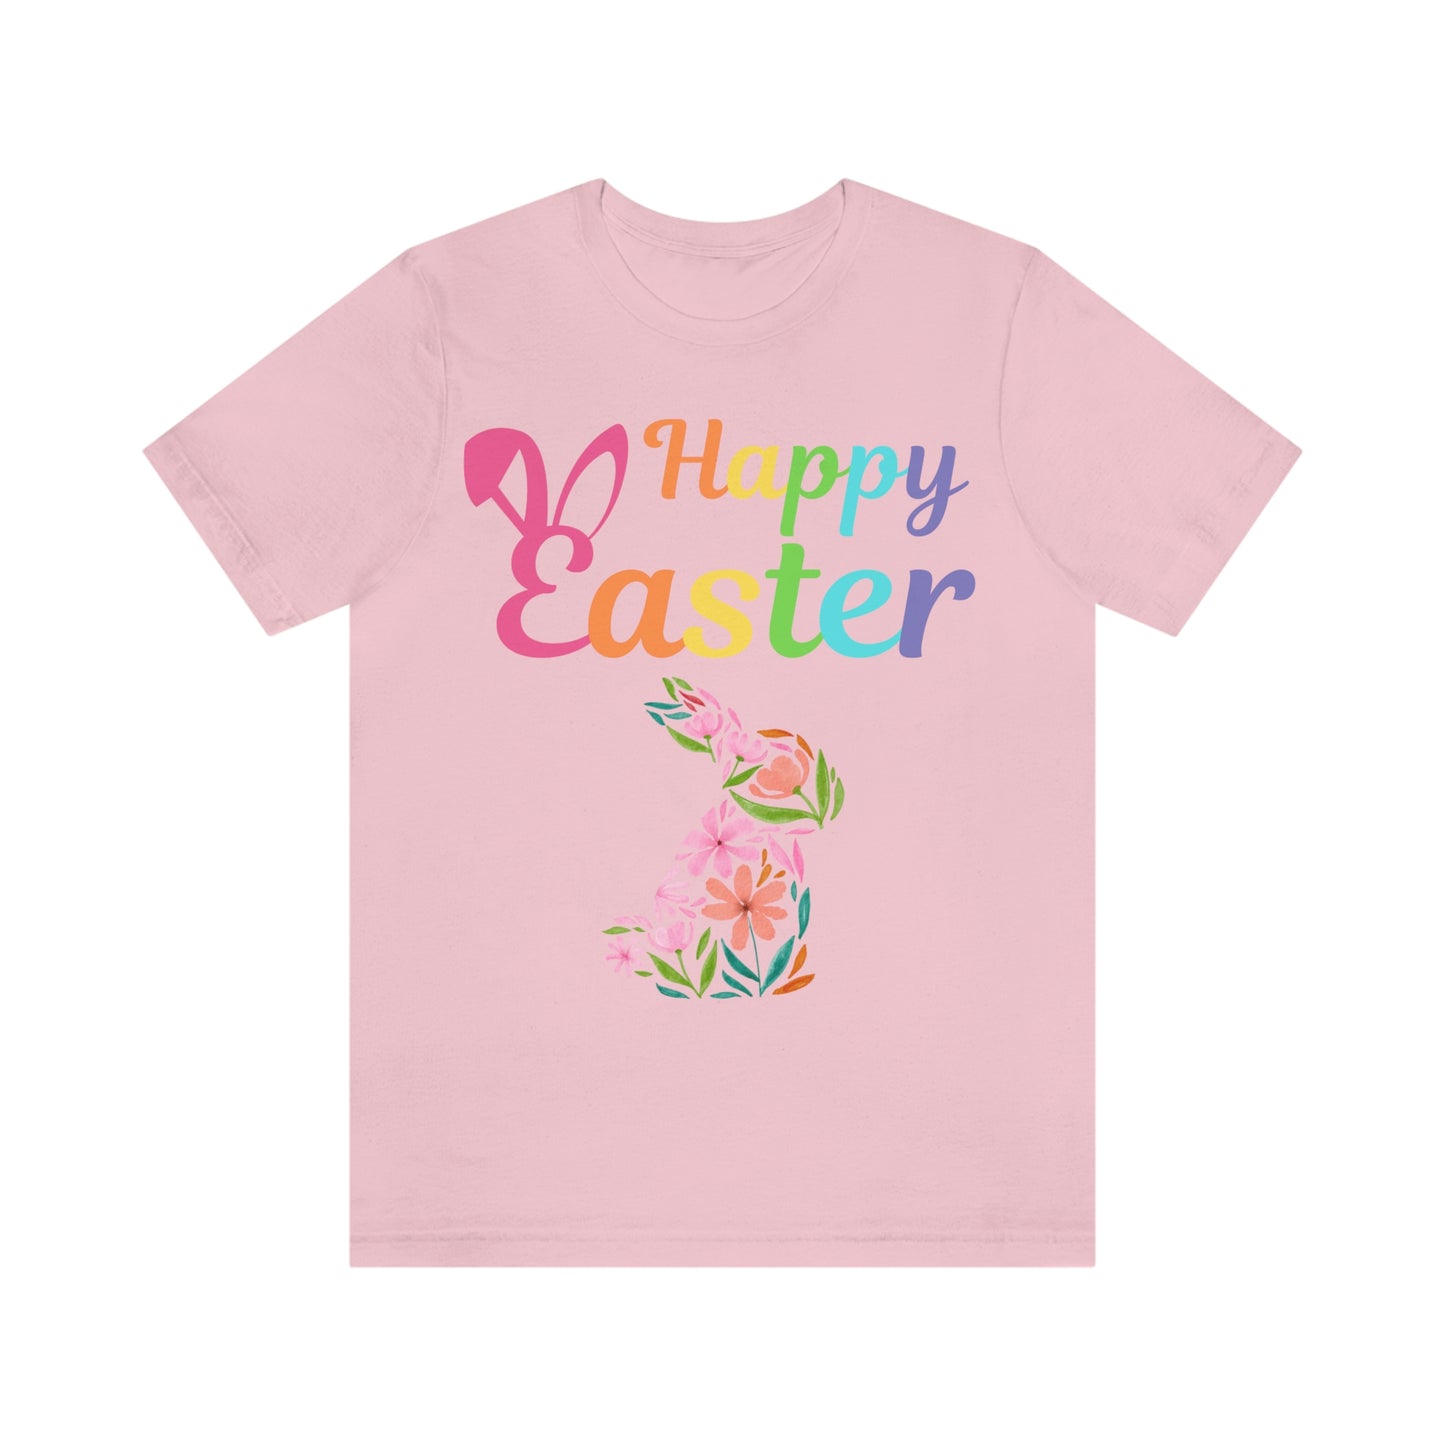 Happy Easter Bunny Shirt Easter Gift women Easter Shirt - Easter Day Shirt Cute Easter flower shirt